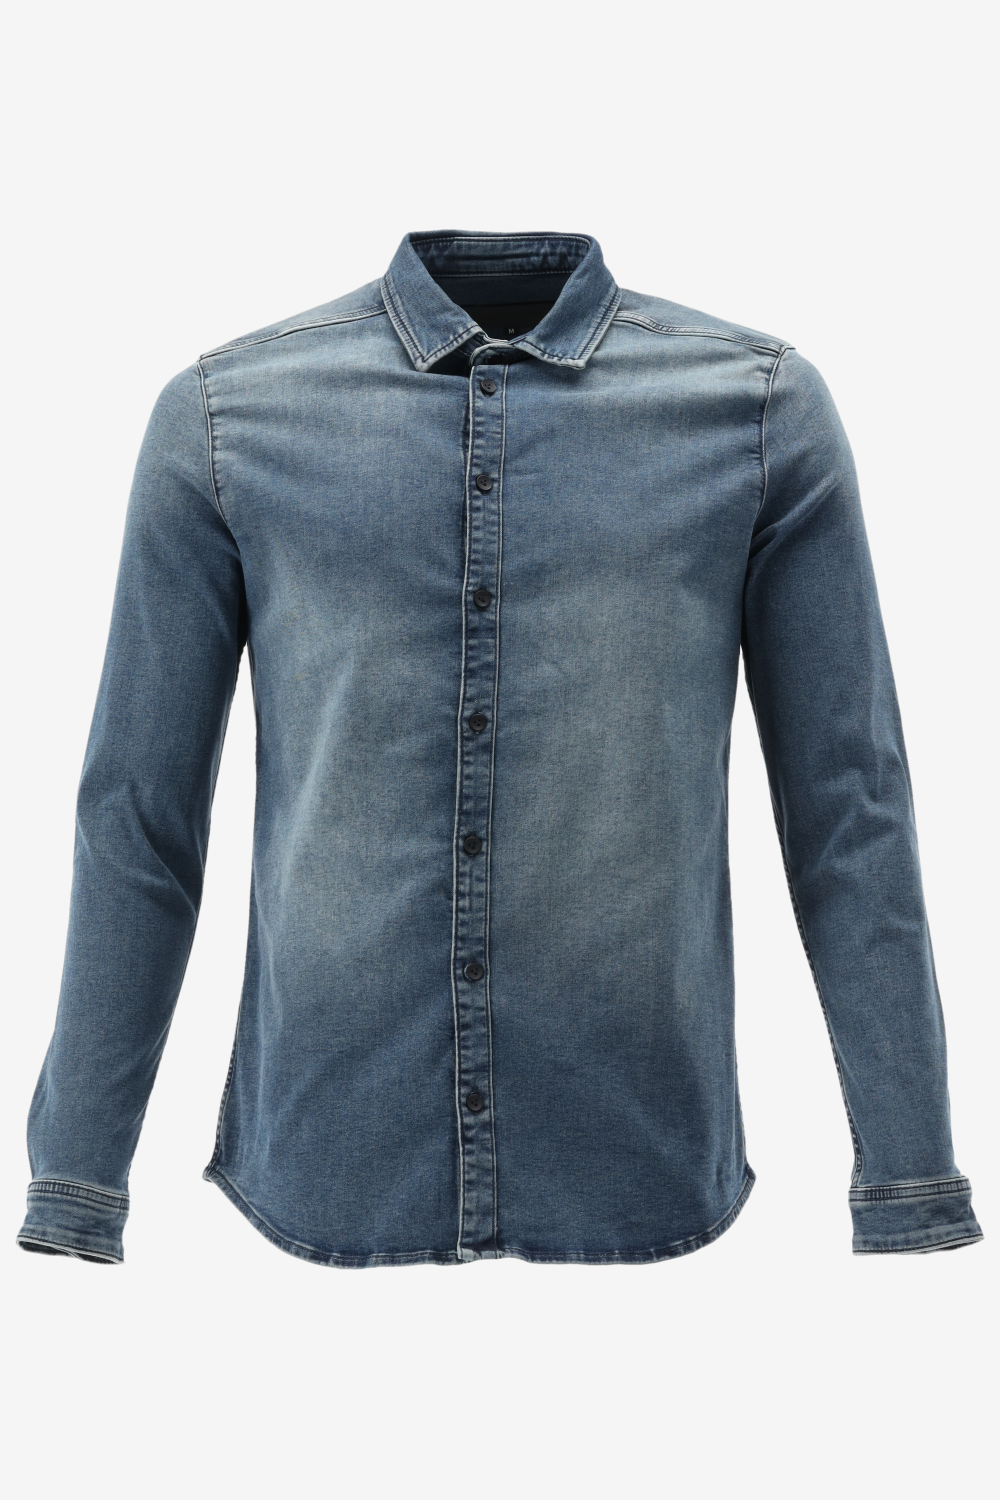 Purewhite -  Heren Regular Fit   Overhemd  - Blauw - Maat XXL